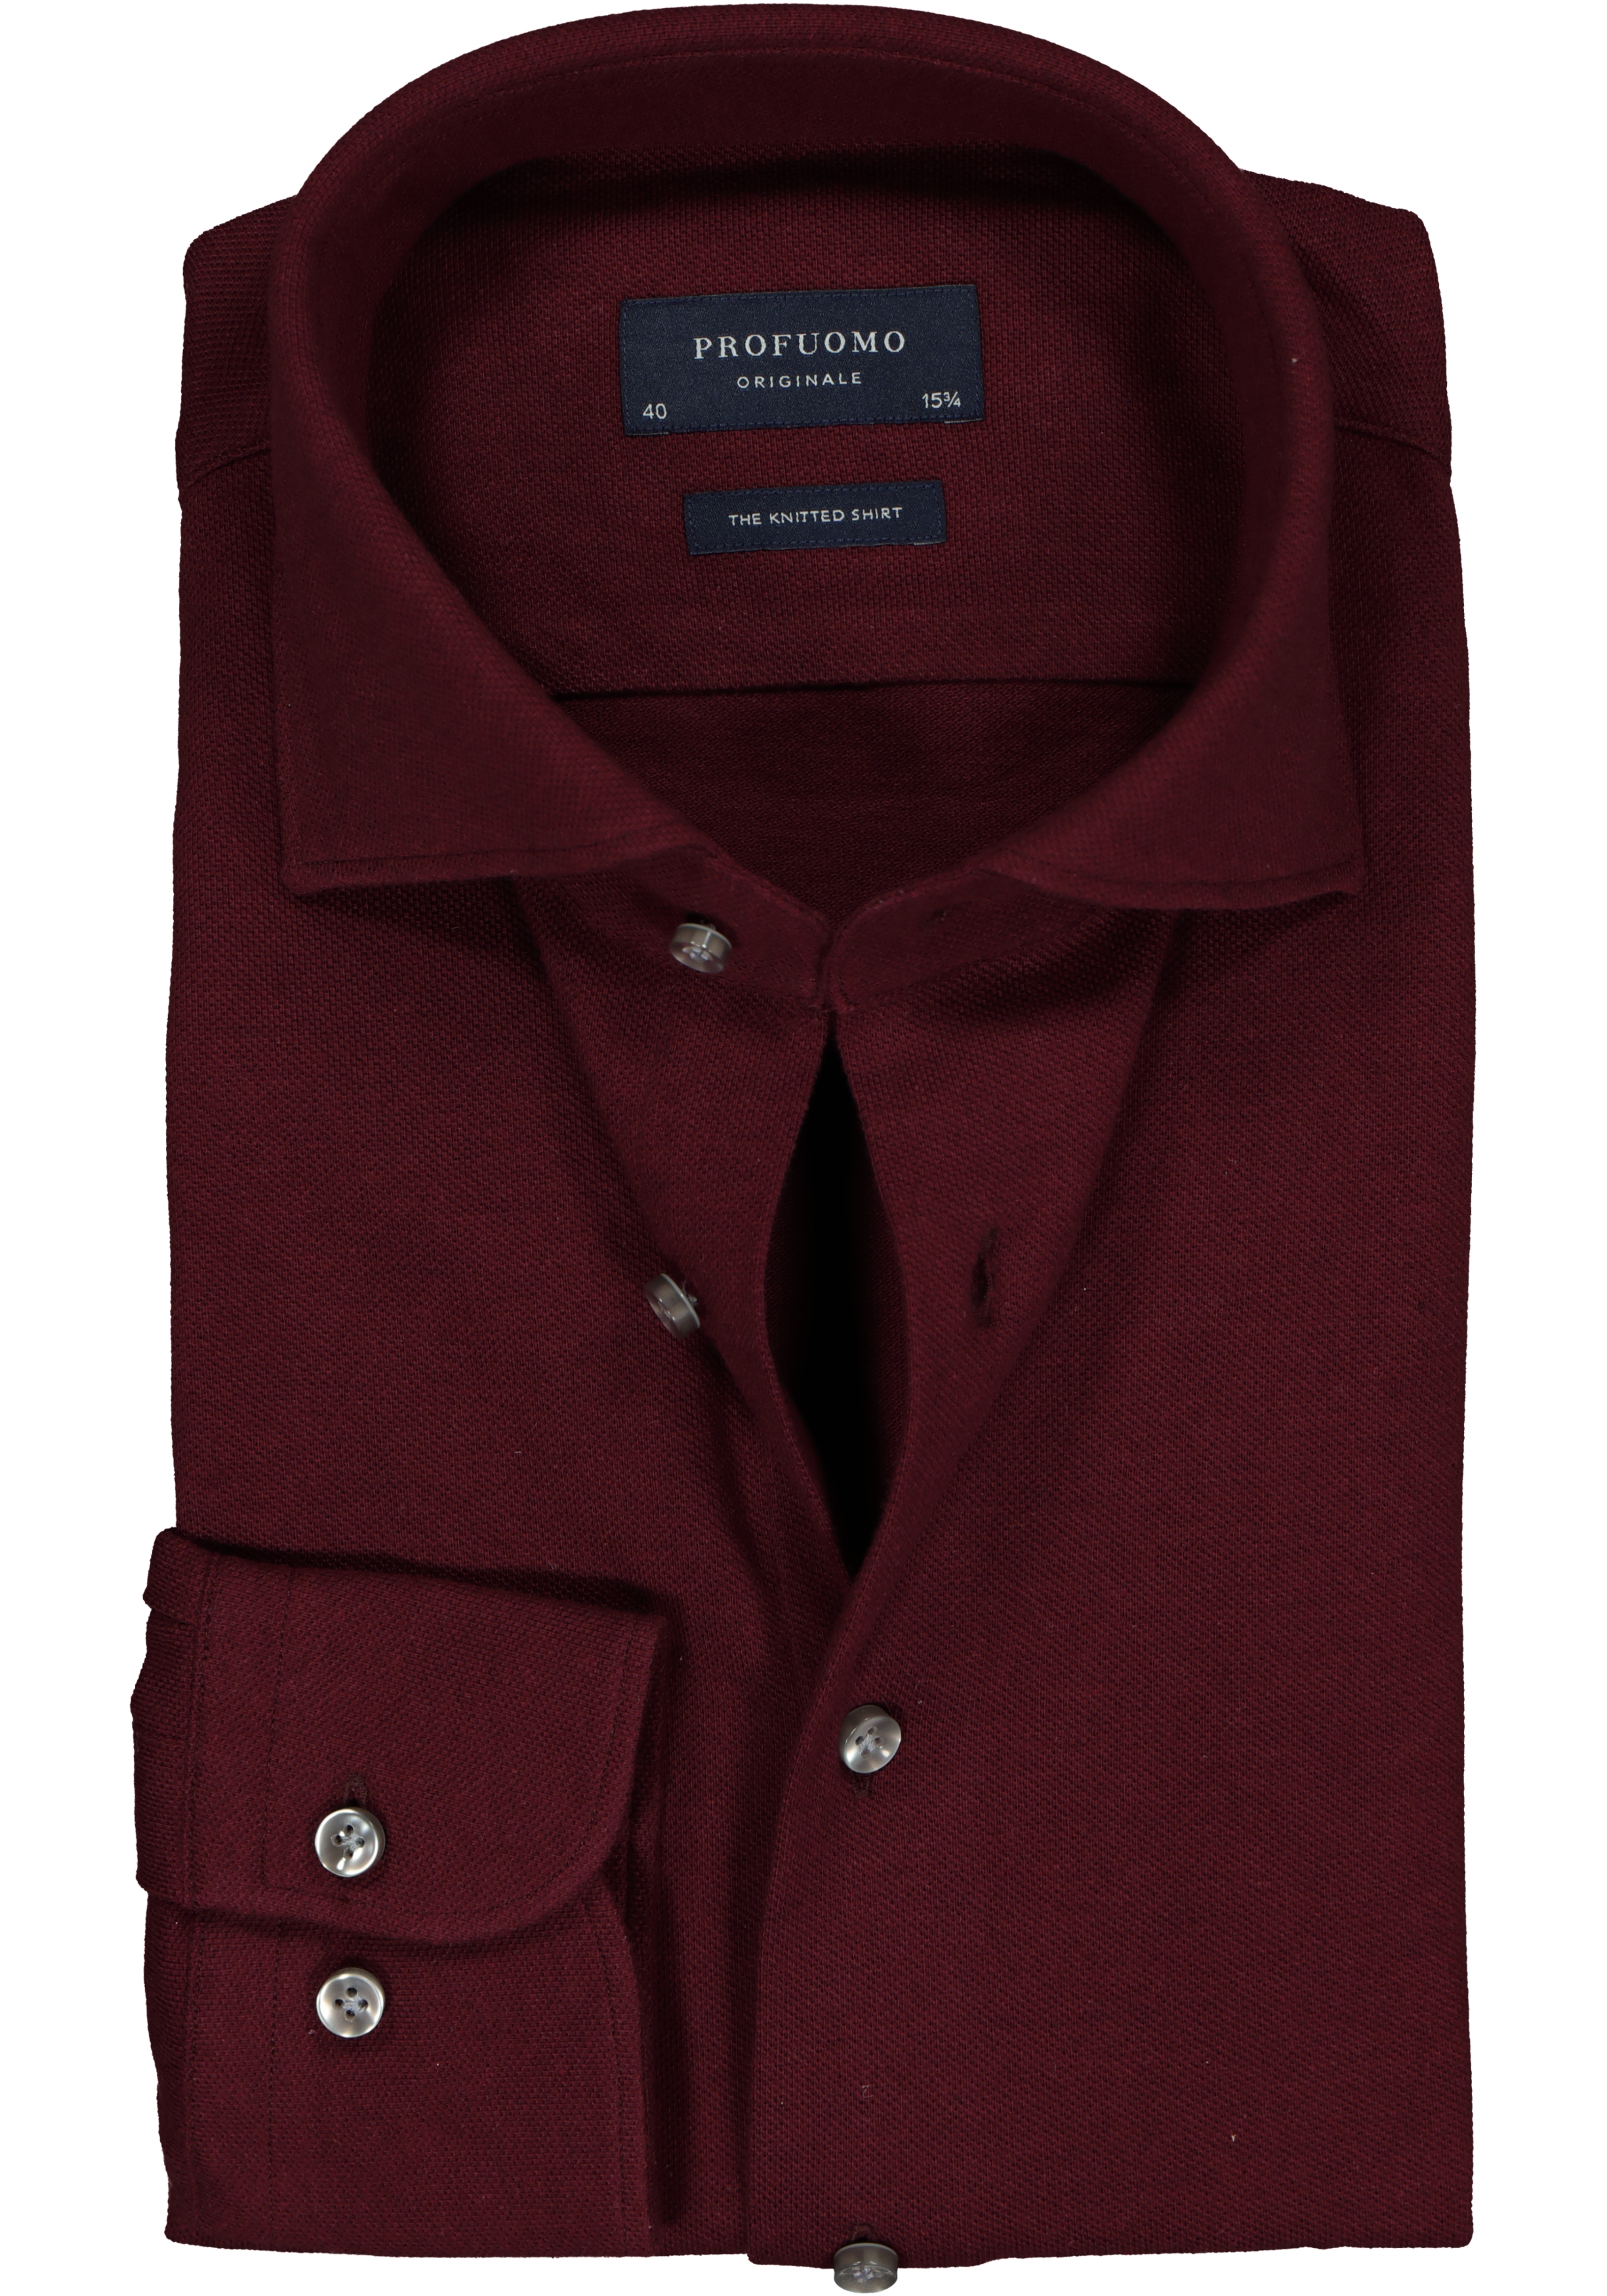 Profuomo Originale slim fit jersey overhemd, knitted shirt pique, bordeaux rood melange